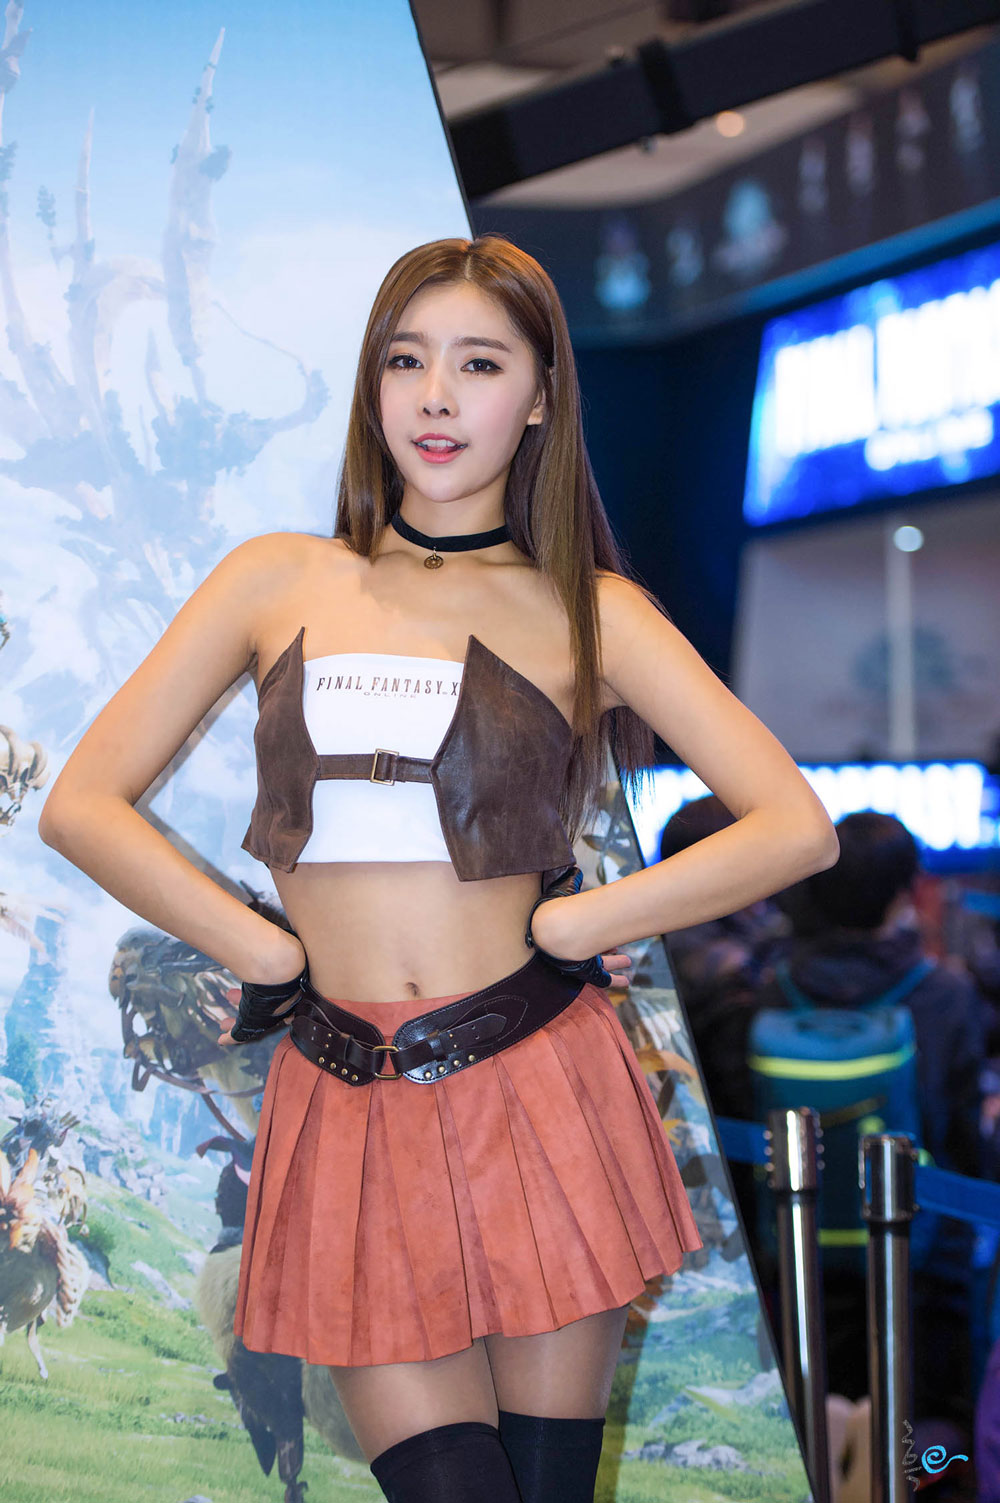 Min Jei G-STAR 2014 Final Fantasy